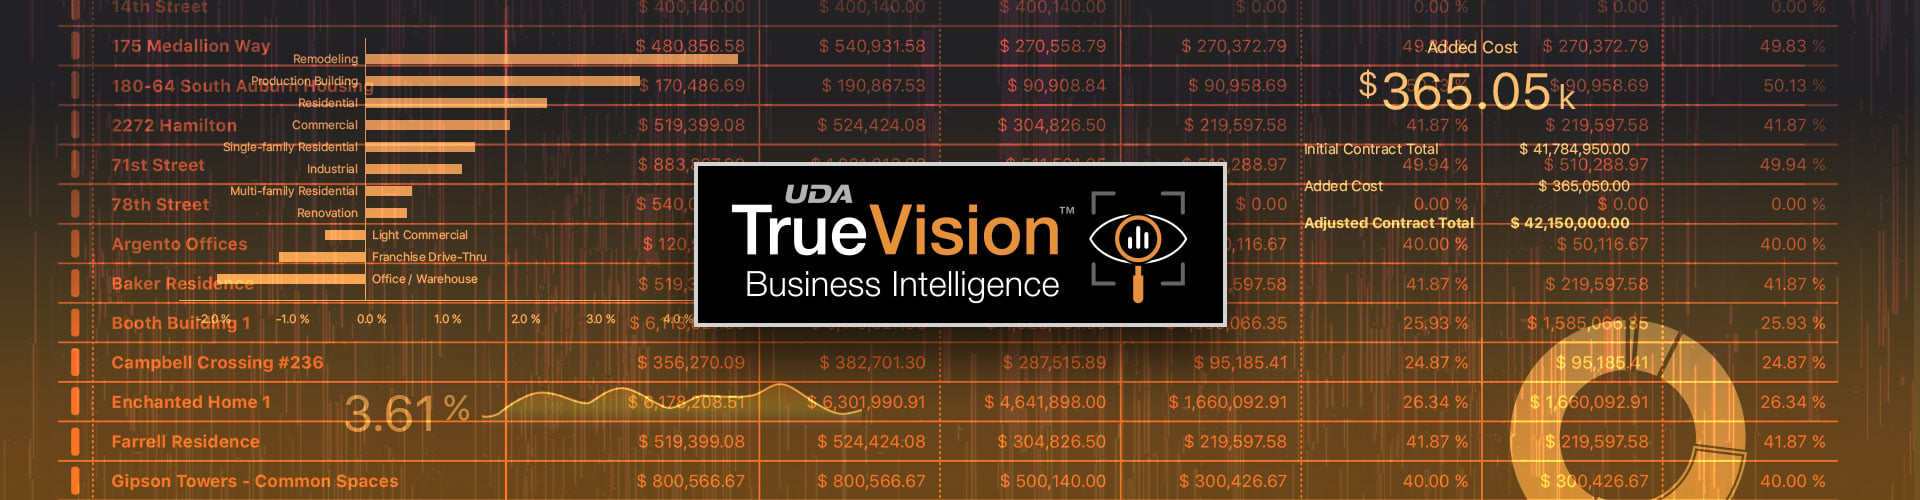 01_truevision_business_intelligence_1920x500